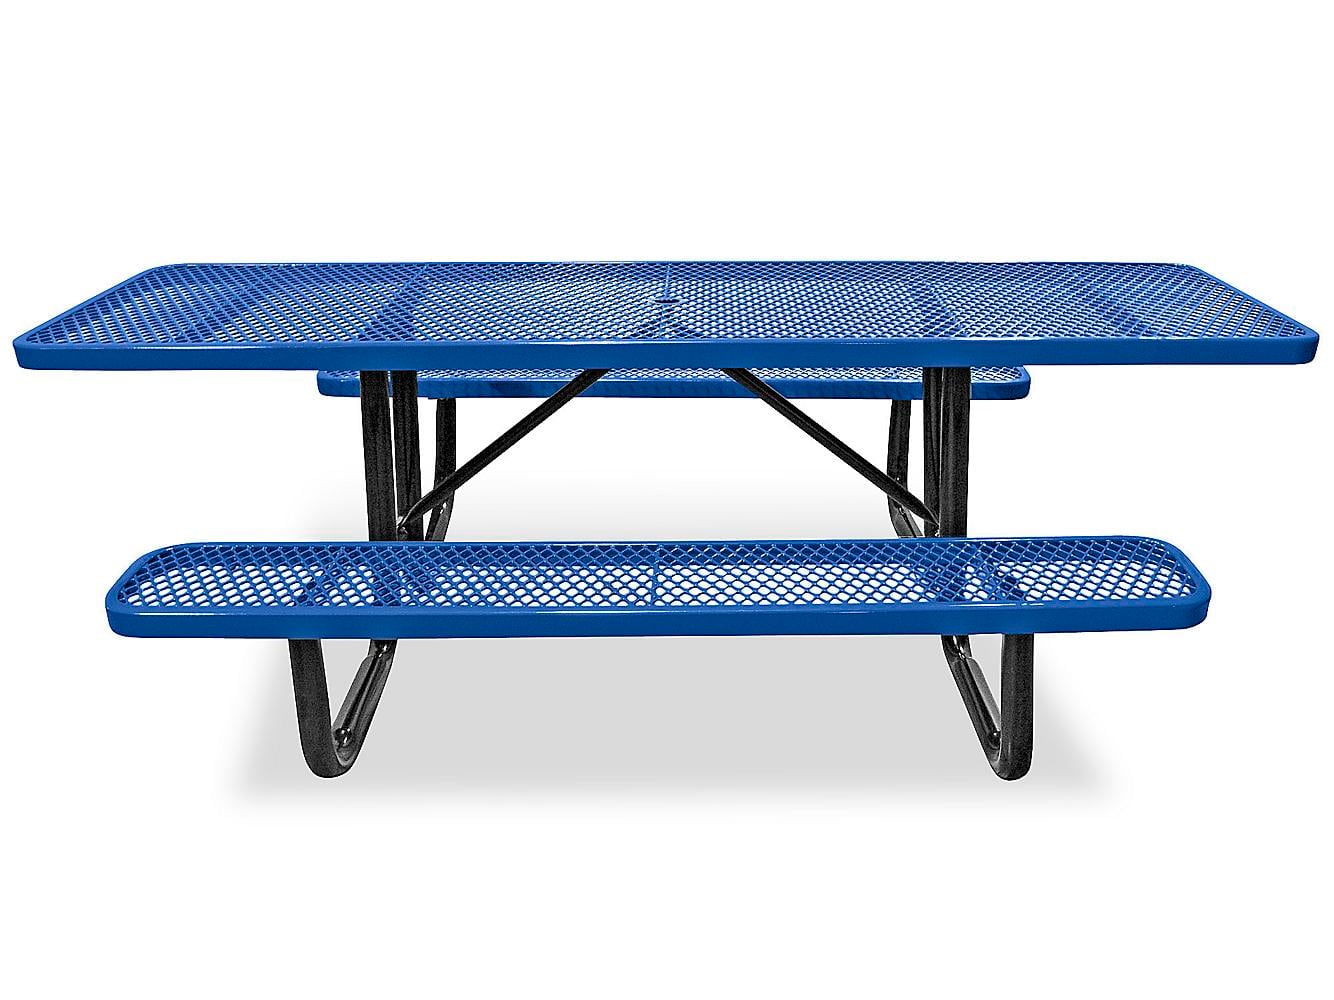 8' rectangular blue picnic table